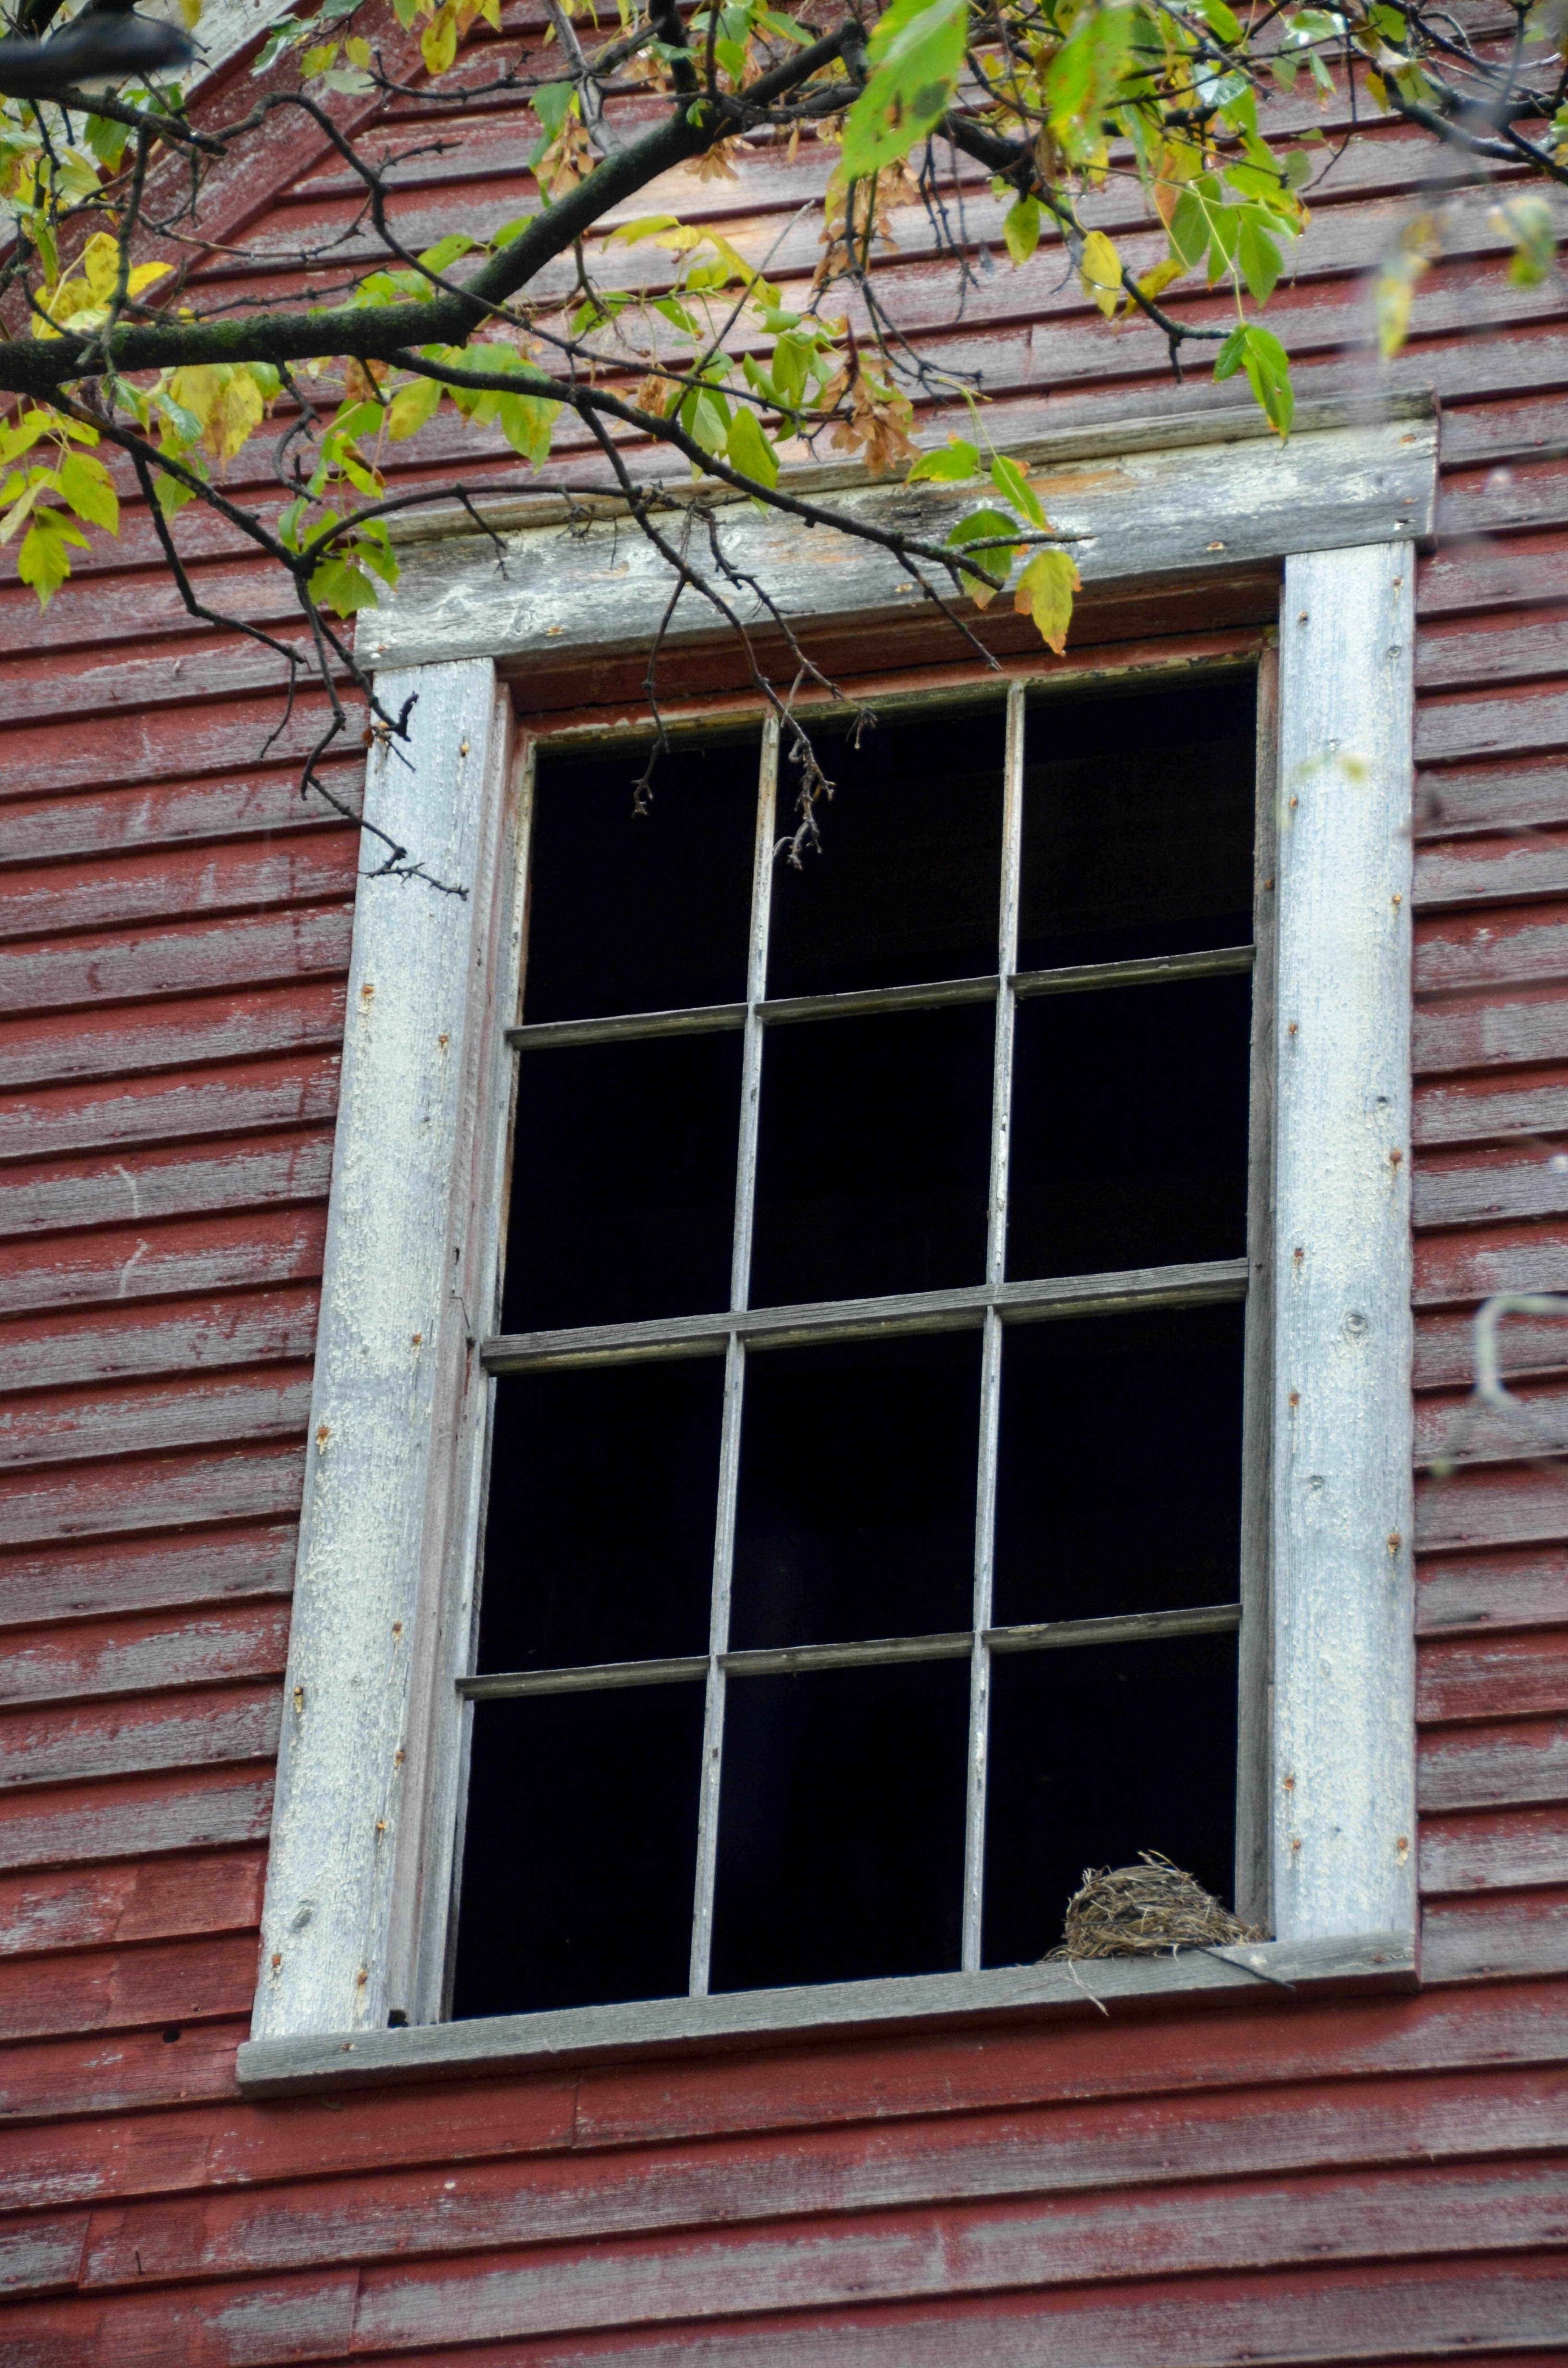 Bird nest in a barn window.